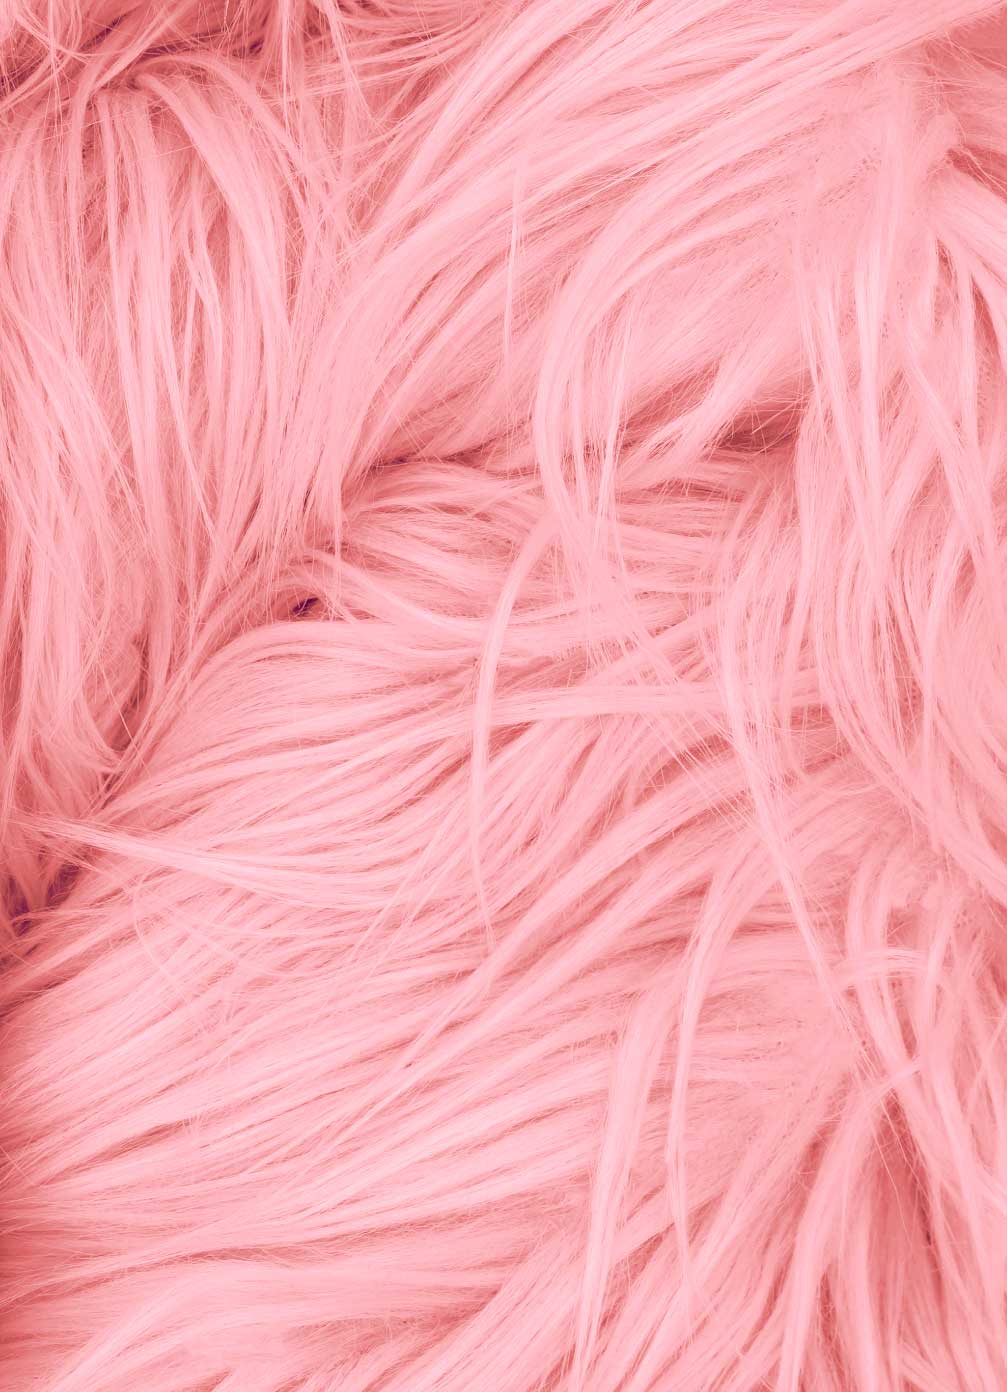 Sexy soft pink fur jacket texture